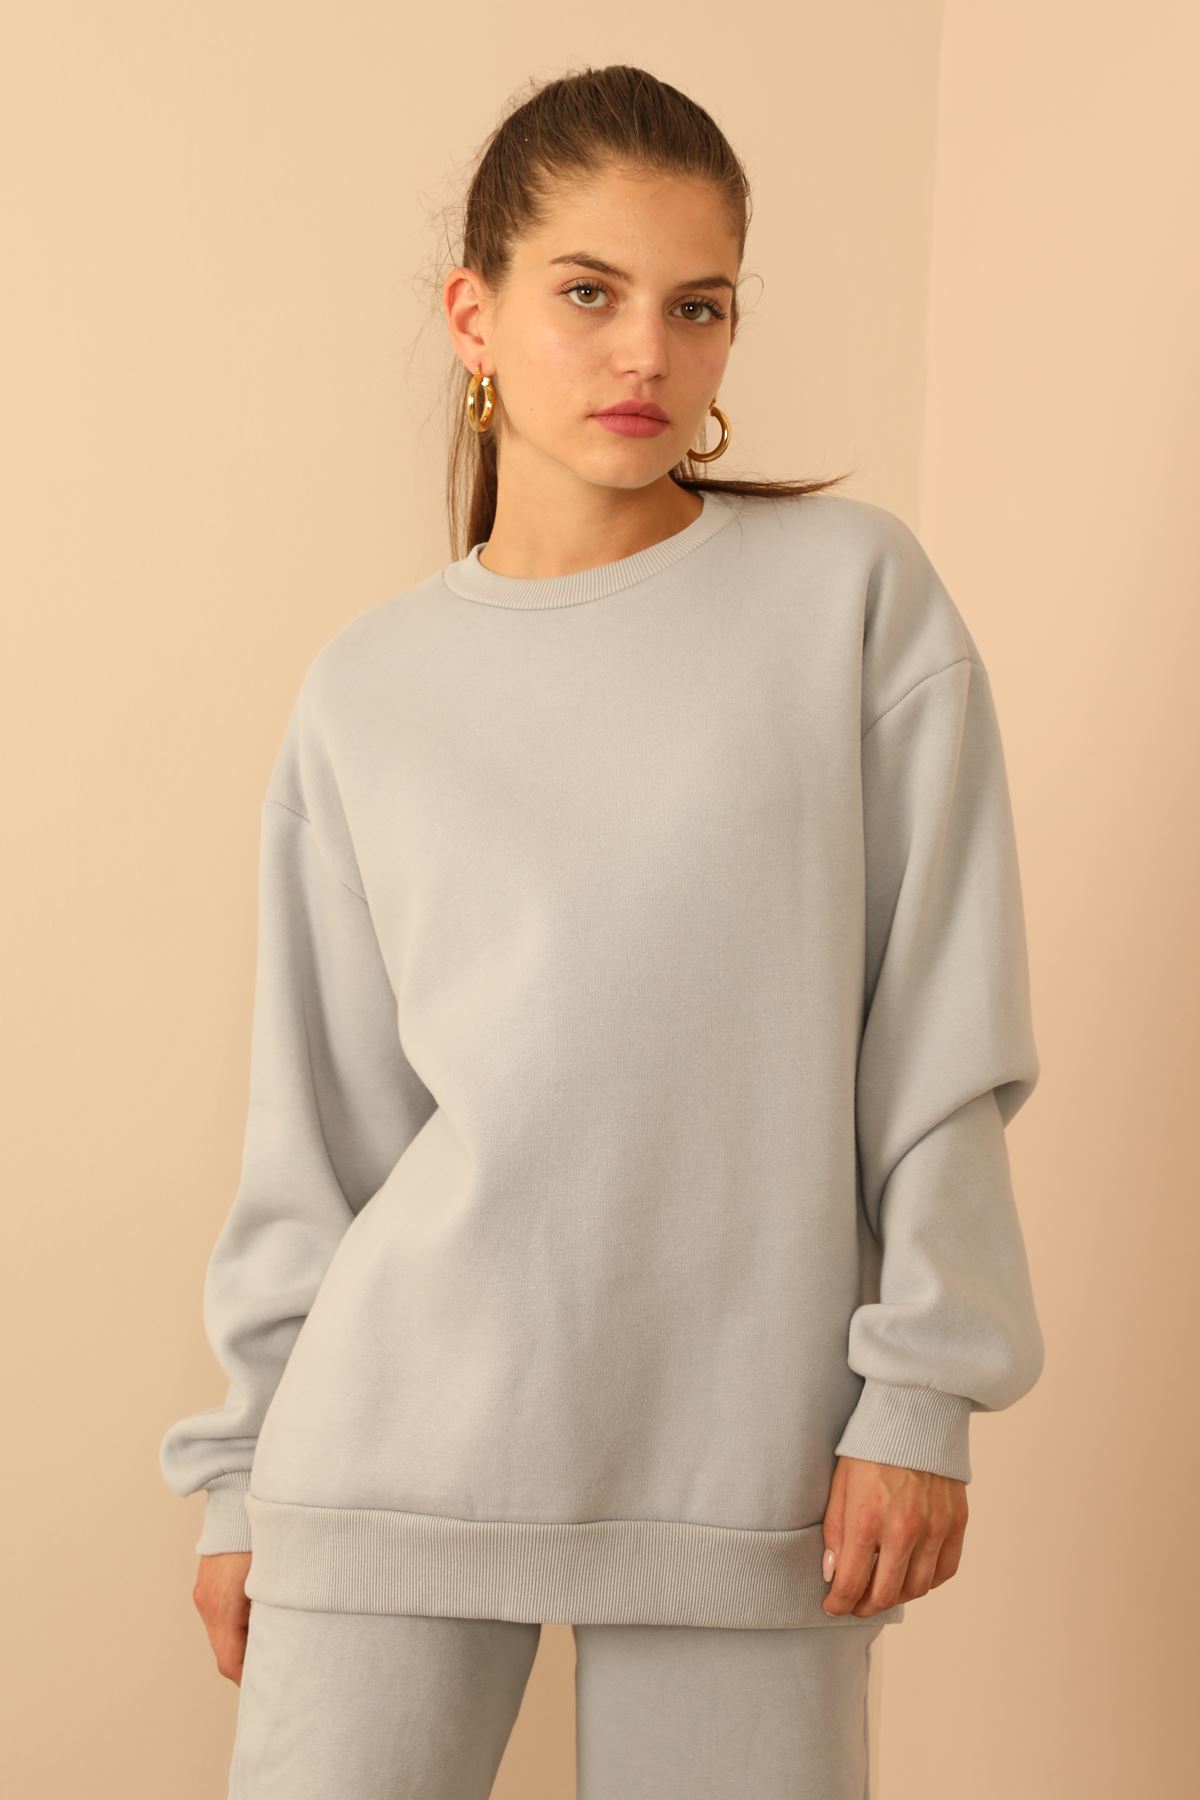 Third Knit With Wool İnside Fabric Long Sleeve Below Hip Women Sweatshirt - Grey